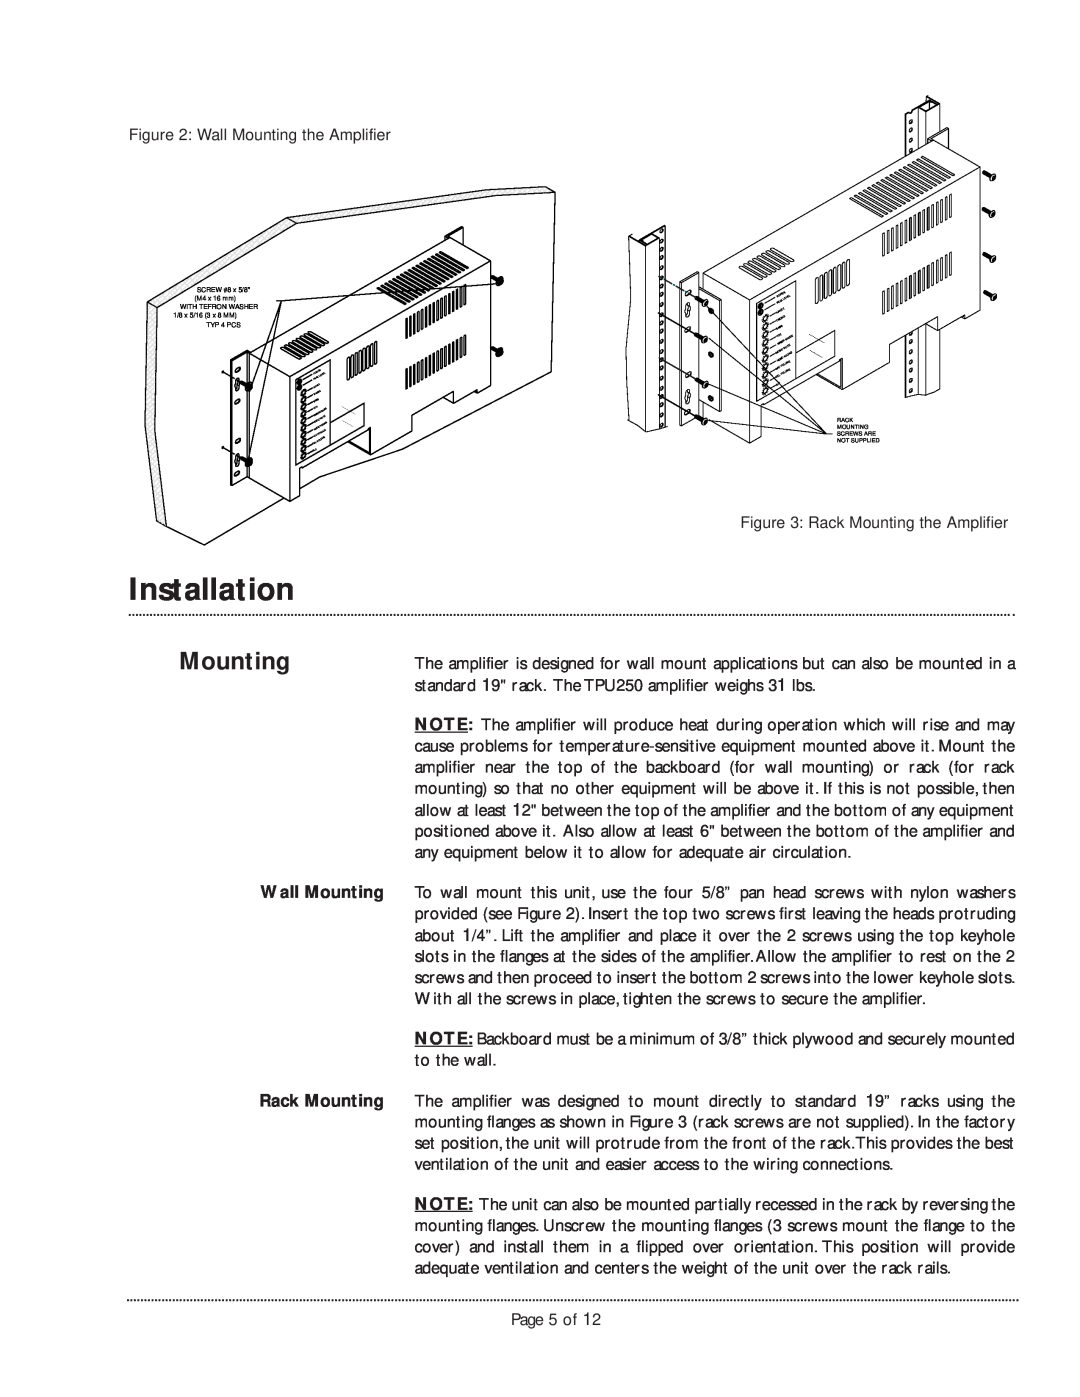 Bogen TPU250 manual Wall Mounting, Rack Mounting, Installation 